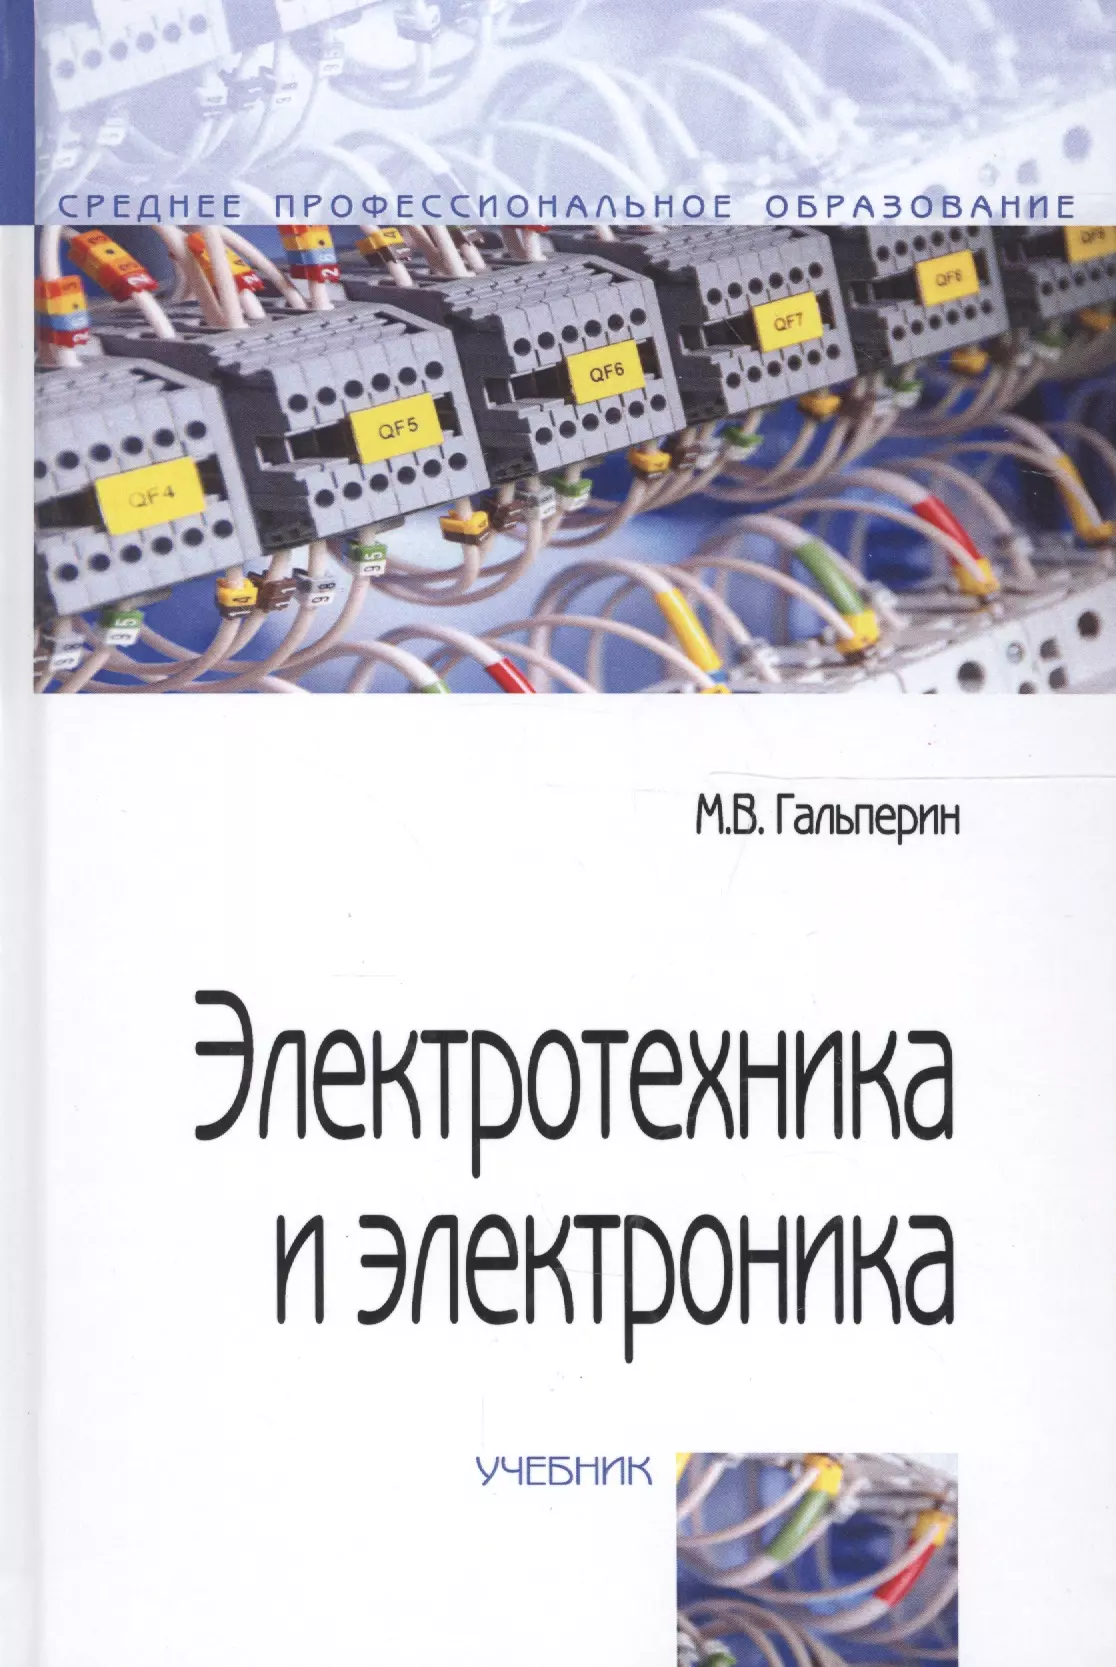 Гальперин Михаил Владимирович - Электротехника и электроника: Учебник - 2-е изд.